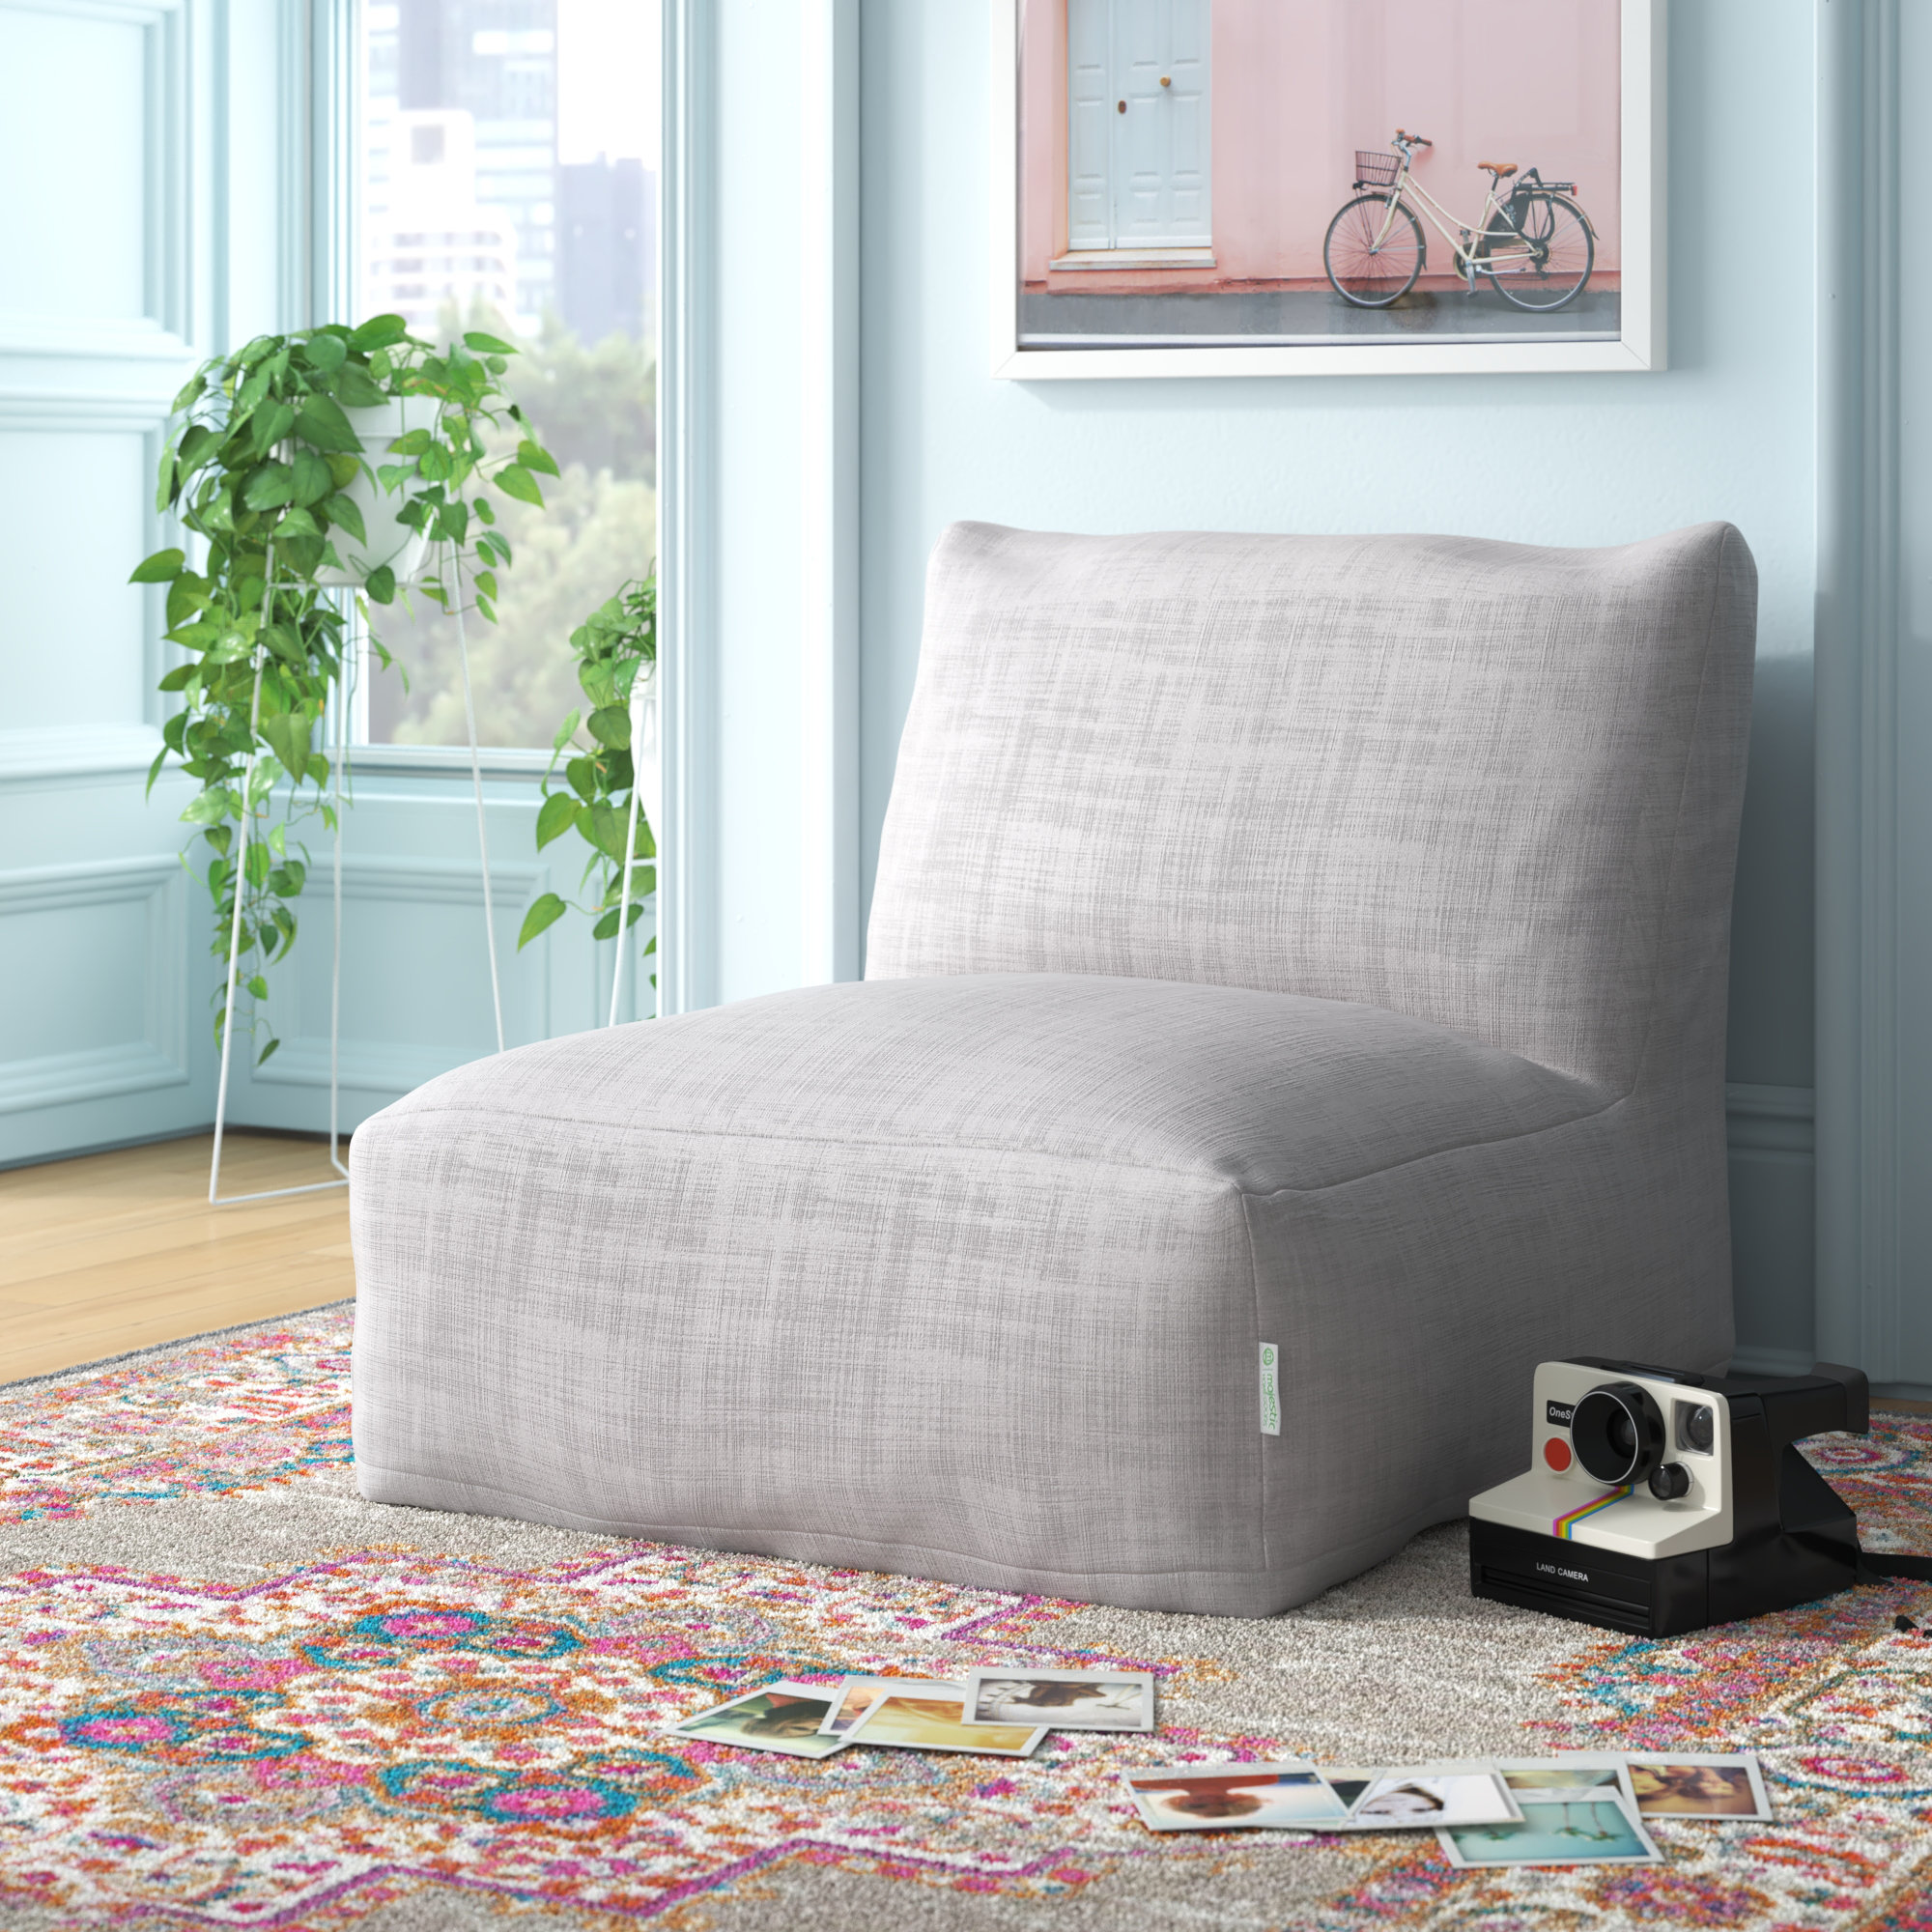 SALE NIB Bean Bag Lounger Sac Cushion Polystyrene Beads Fill Gift Chair Luxury 